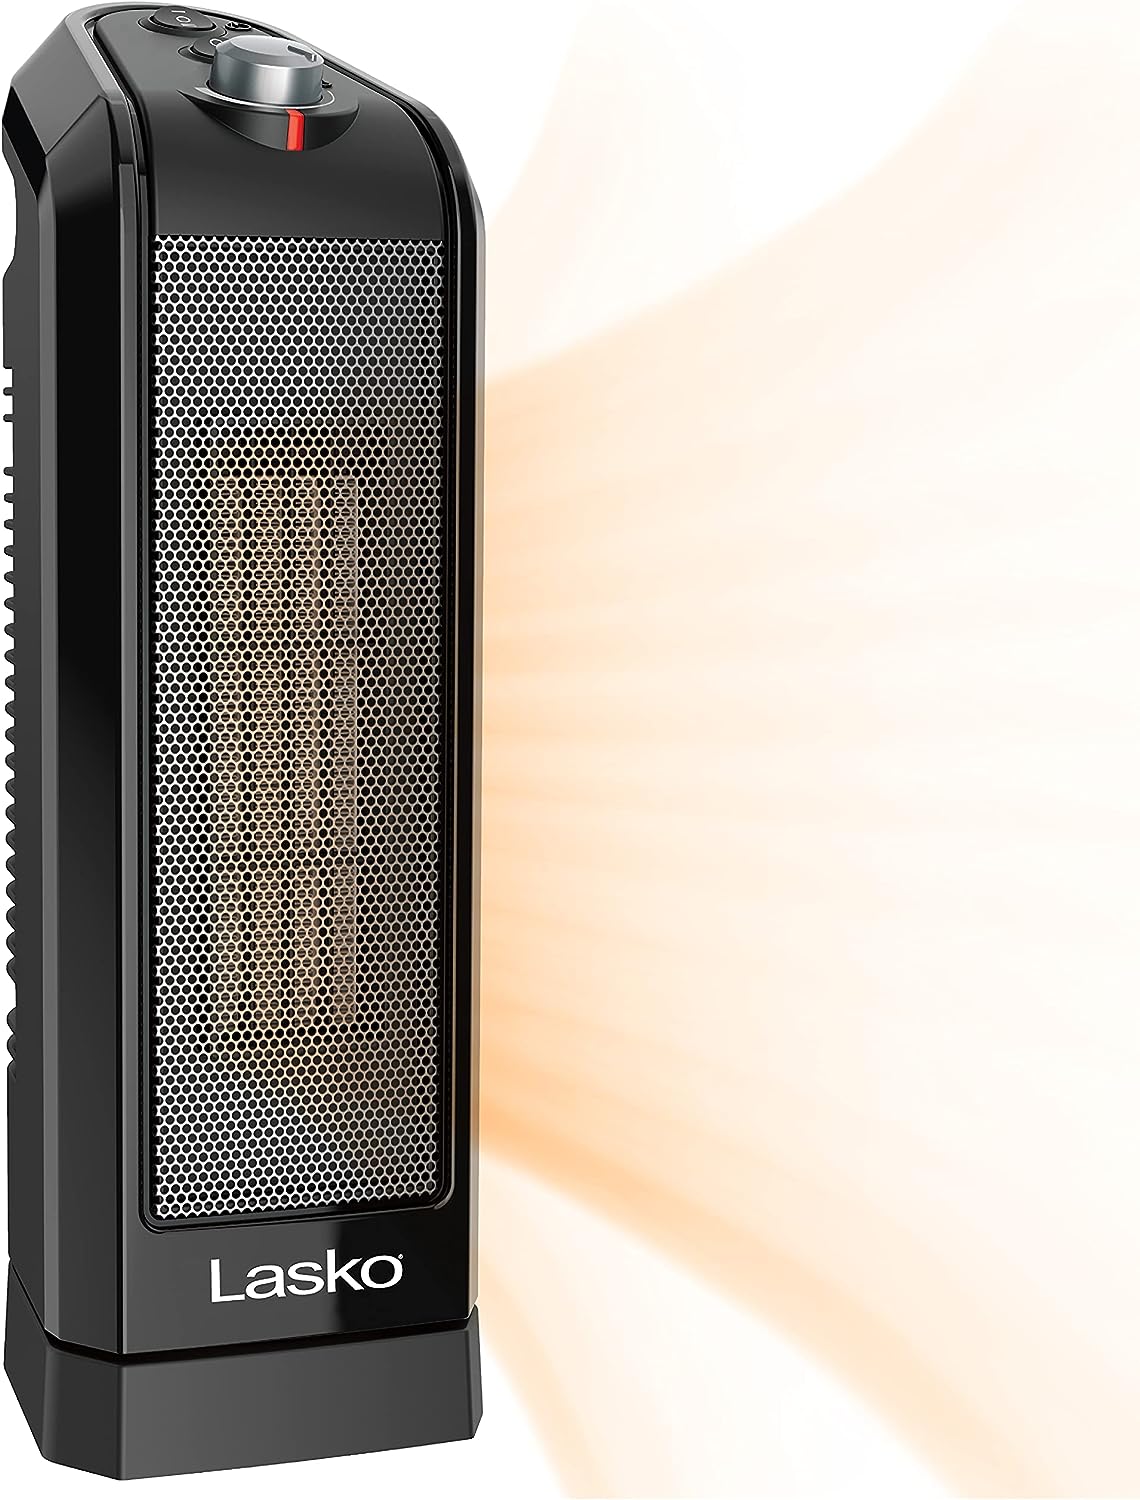 Lasko 1500W Electric Portable Oscillating Ceramic Space Heater